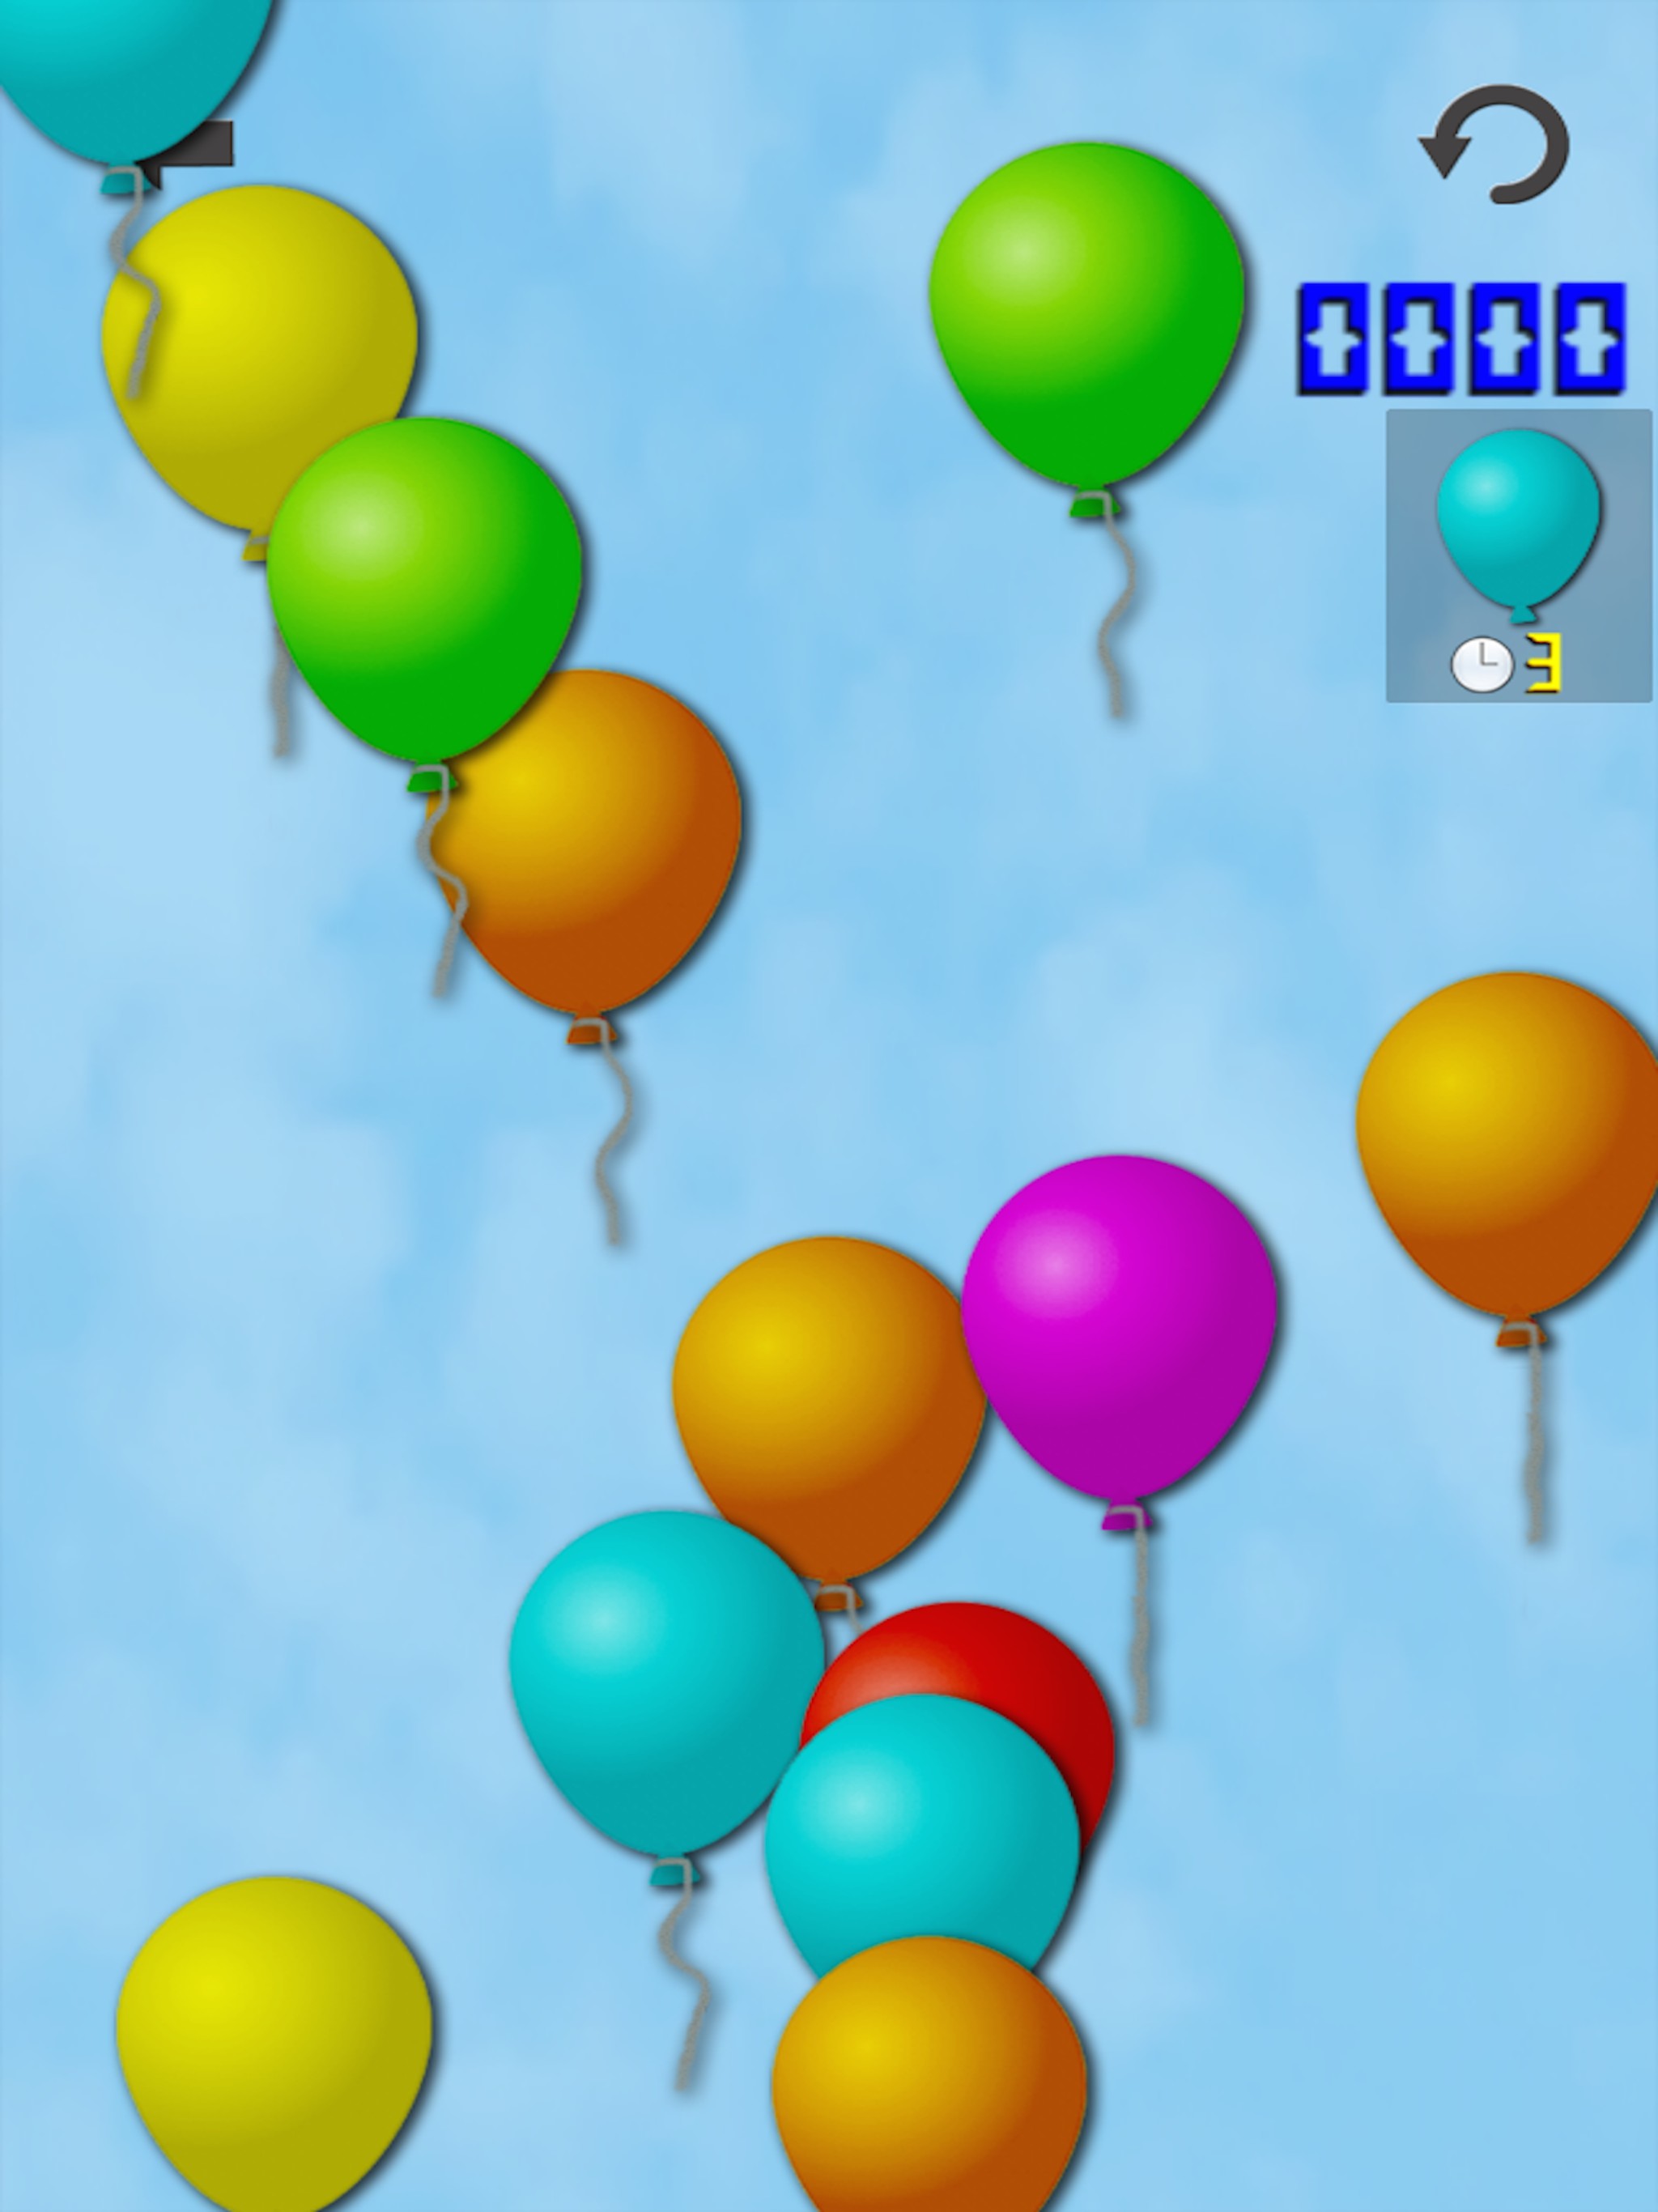 Balloons Splash